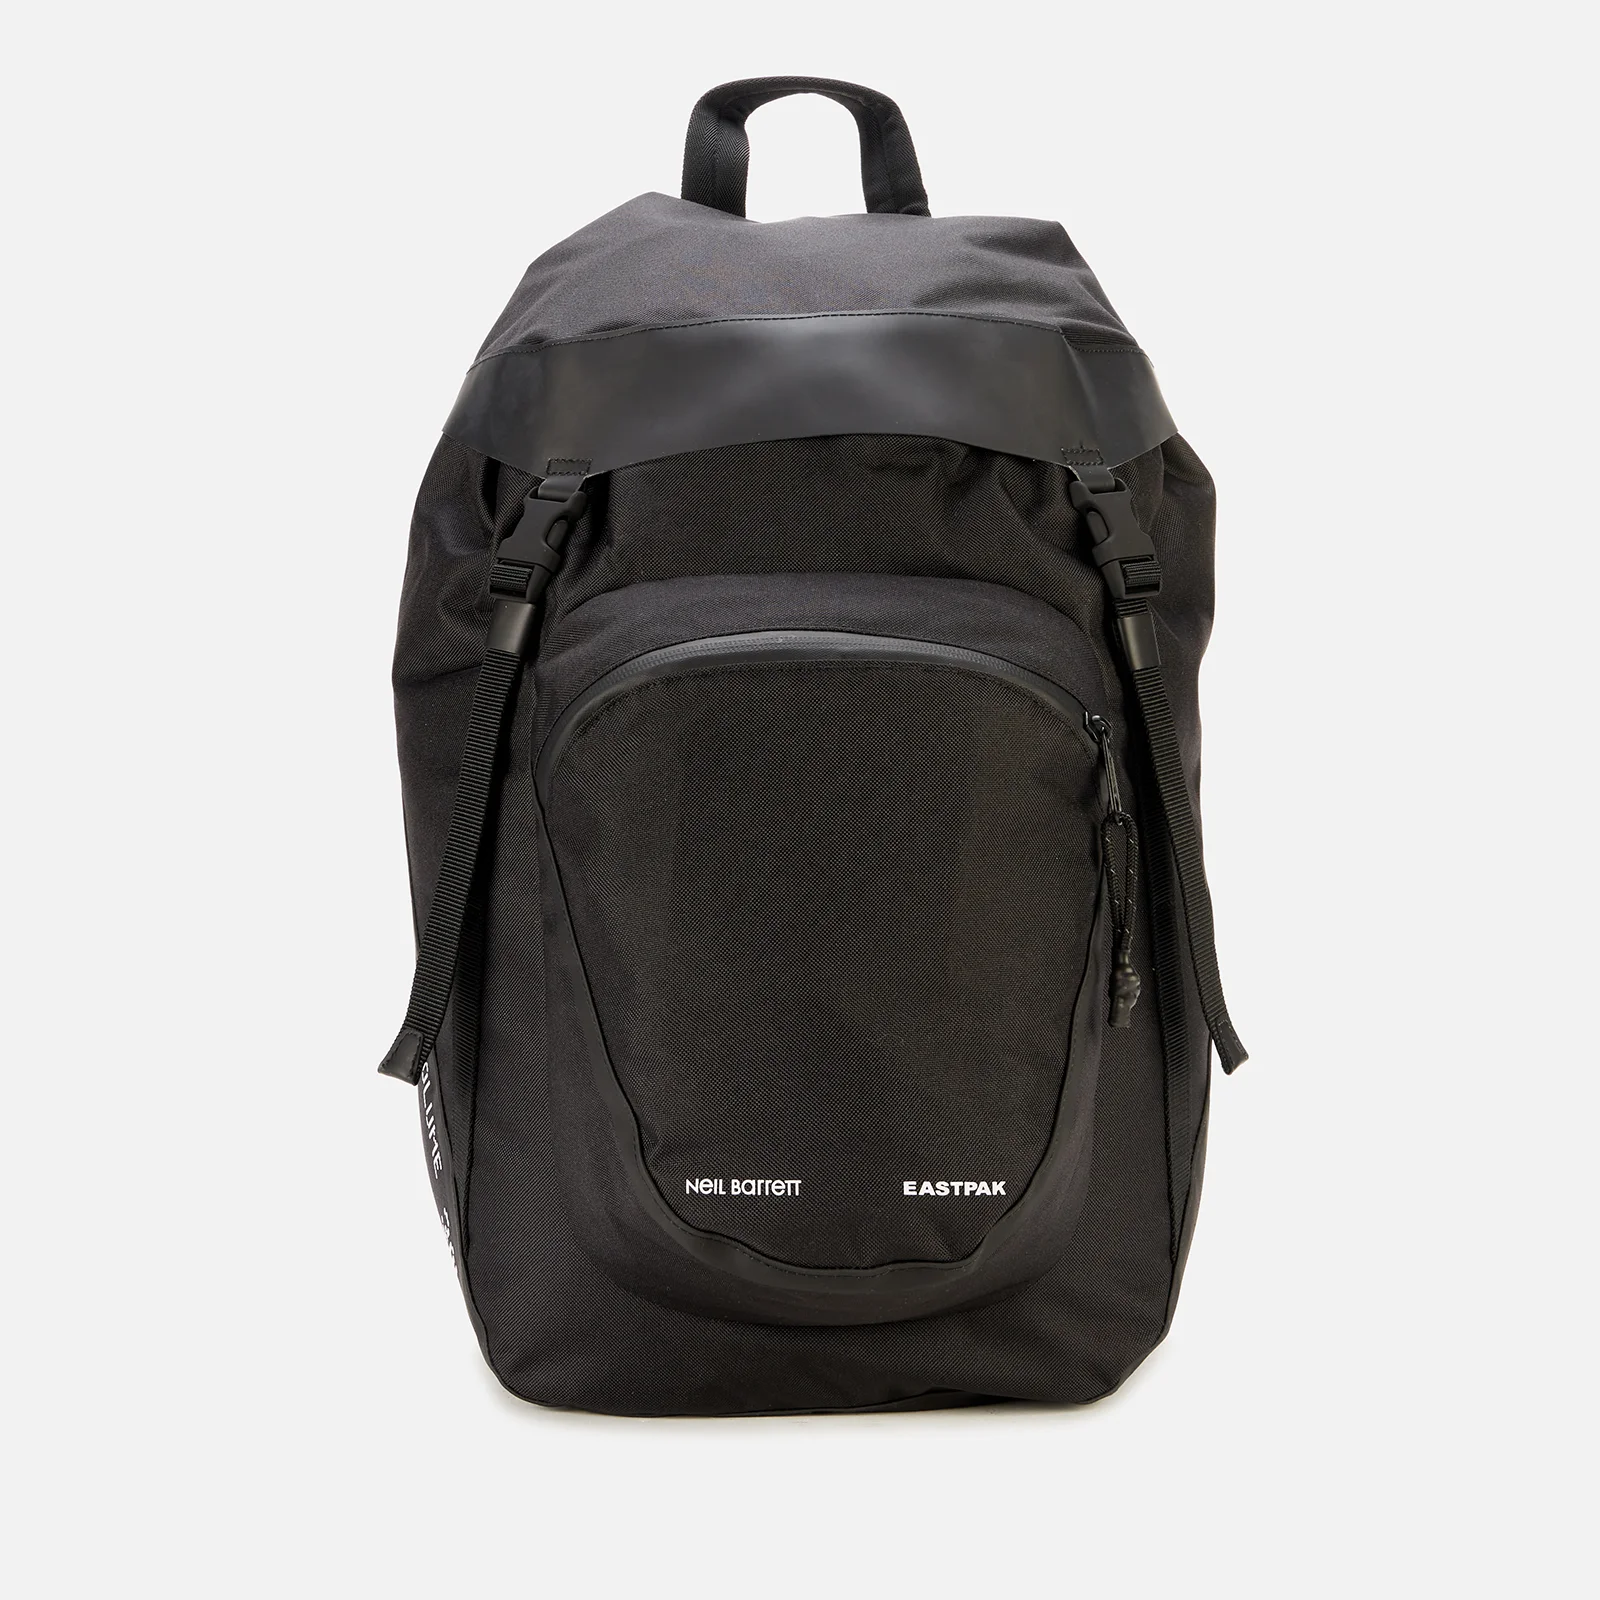 Eastpak X Neil Barrett Men's Topload Backpack - Black Image 1